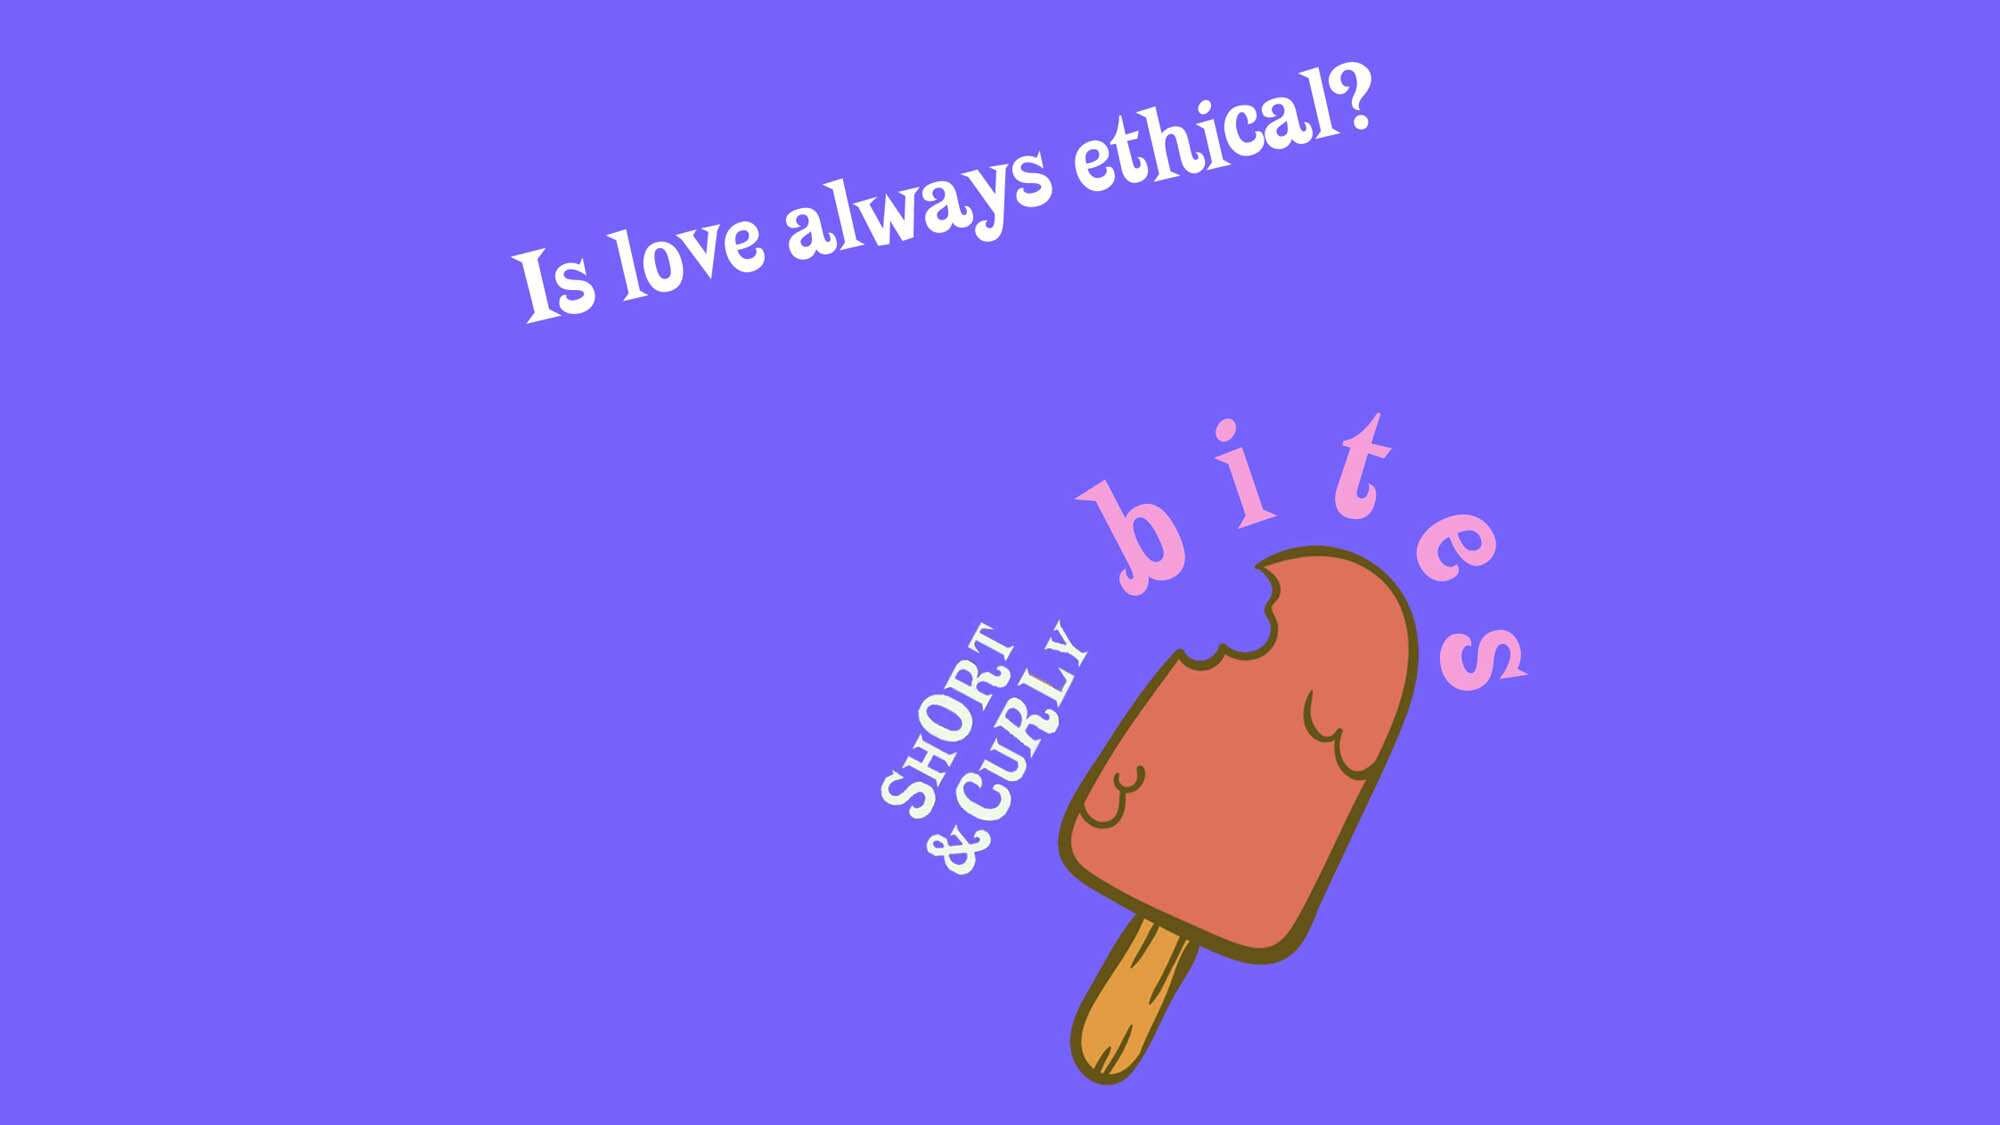 BITE — Is love good?